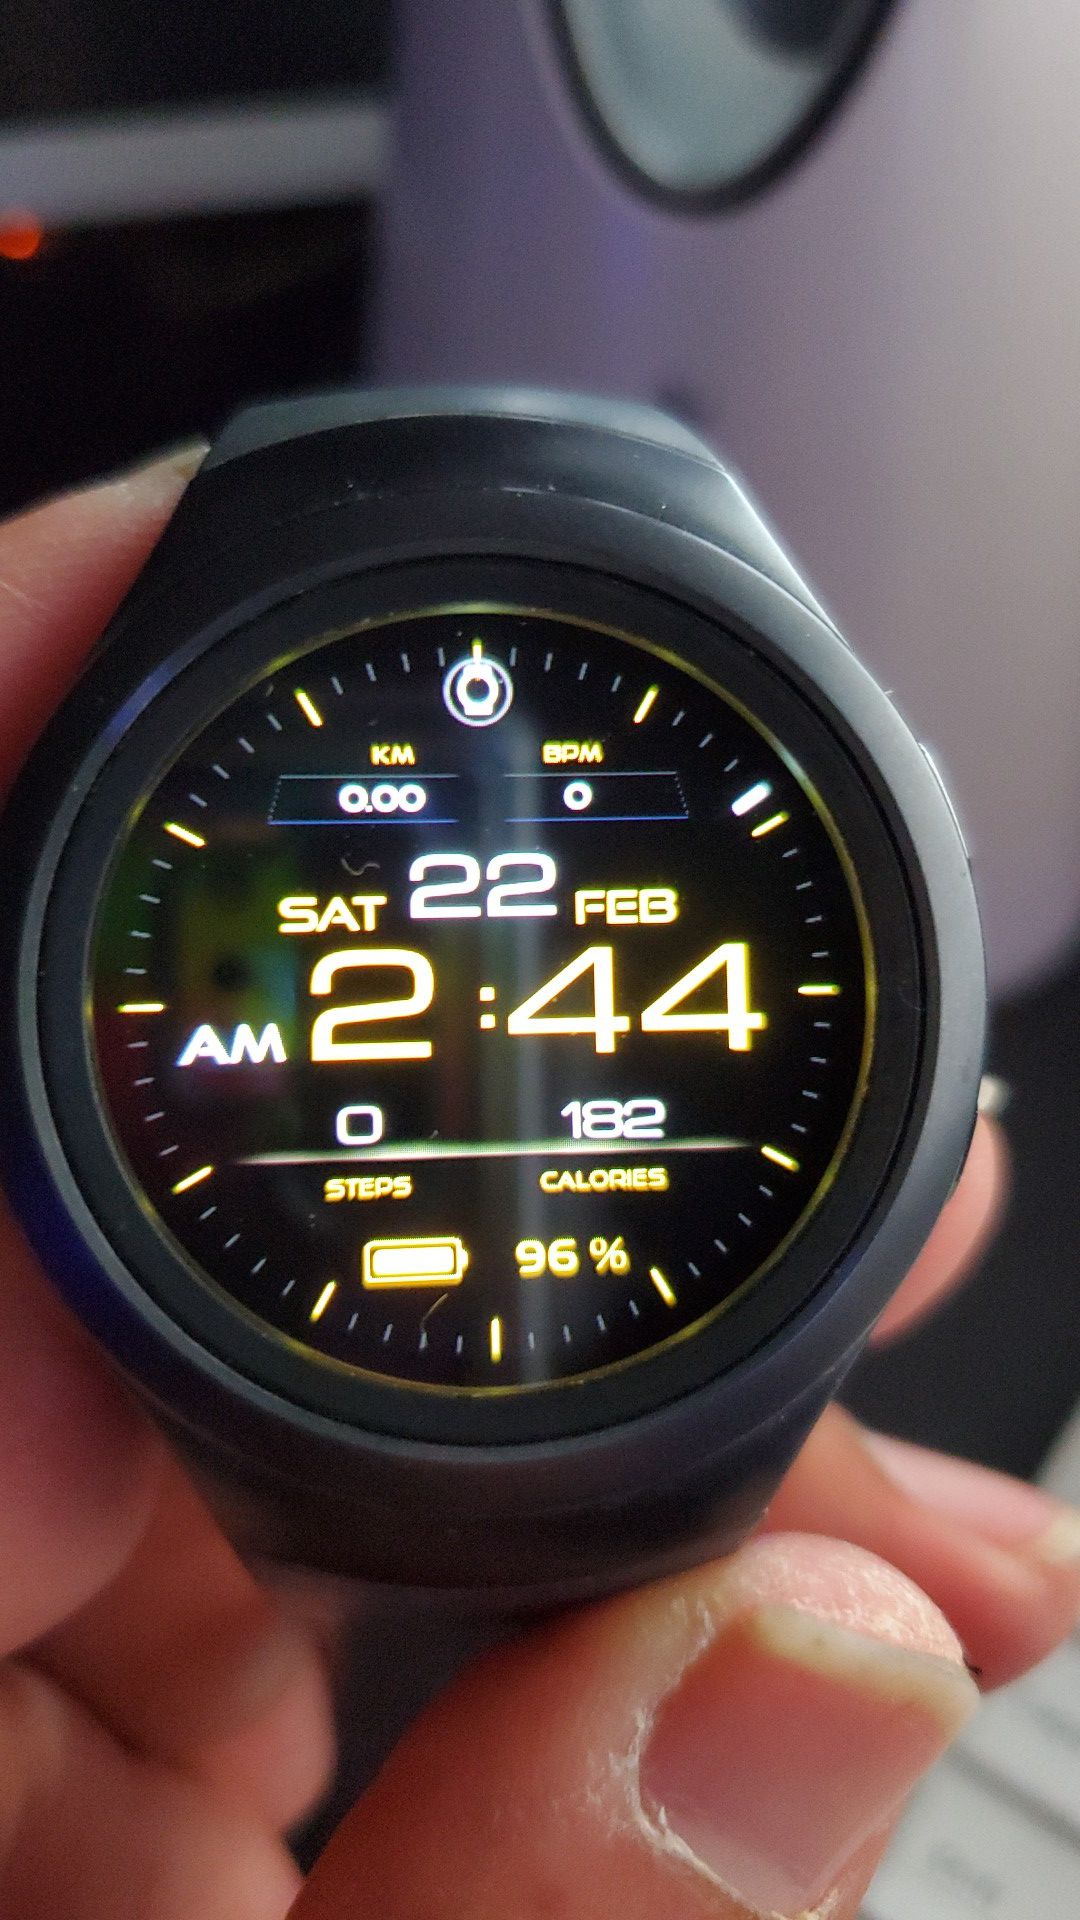 Samsung Gear S2 Watch Tmobile Watch Clean IMEI